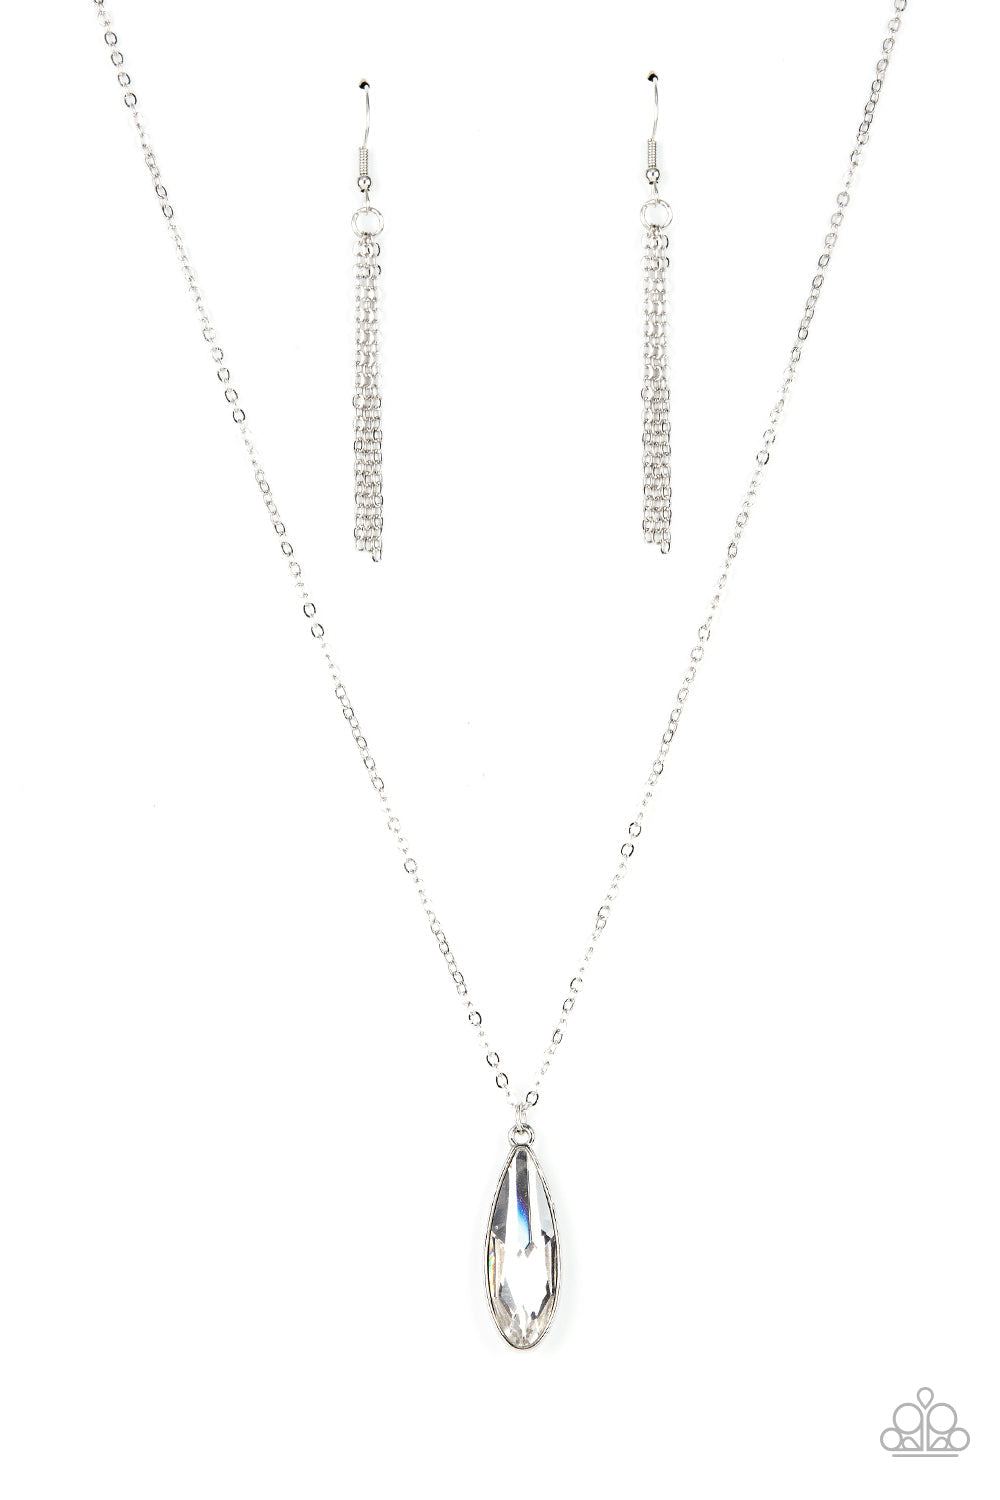 Prismatically Polished - White Elongated Teardrop Gem Pendant Paparazzi Necklace & matching earrings